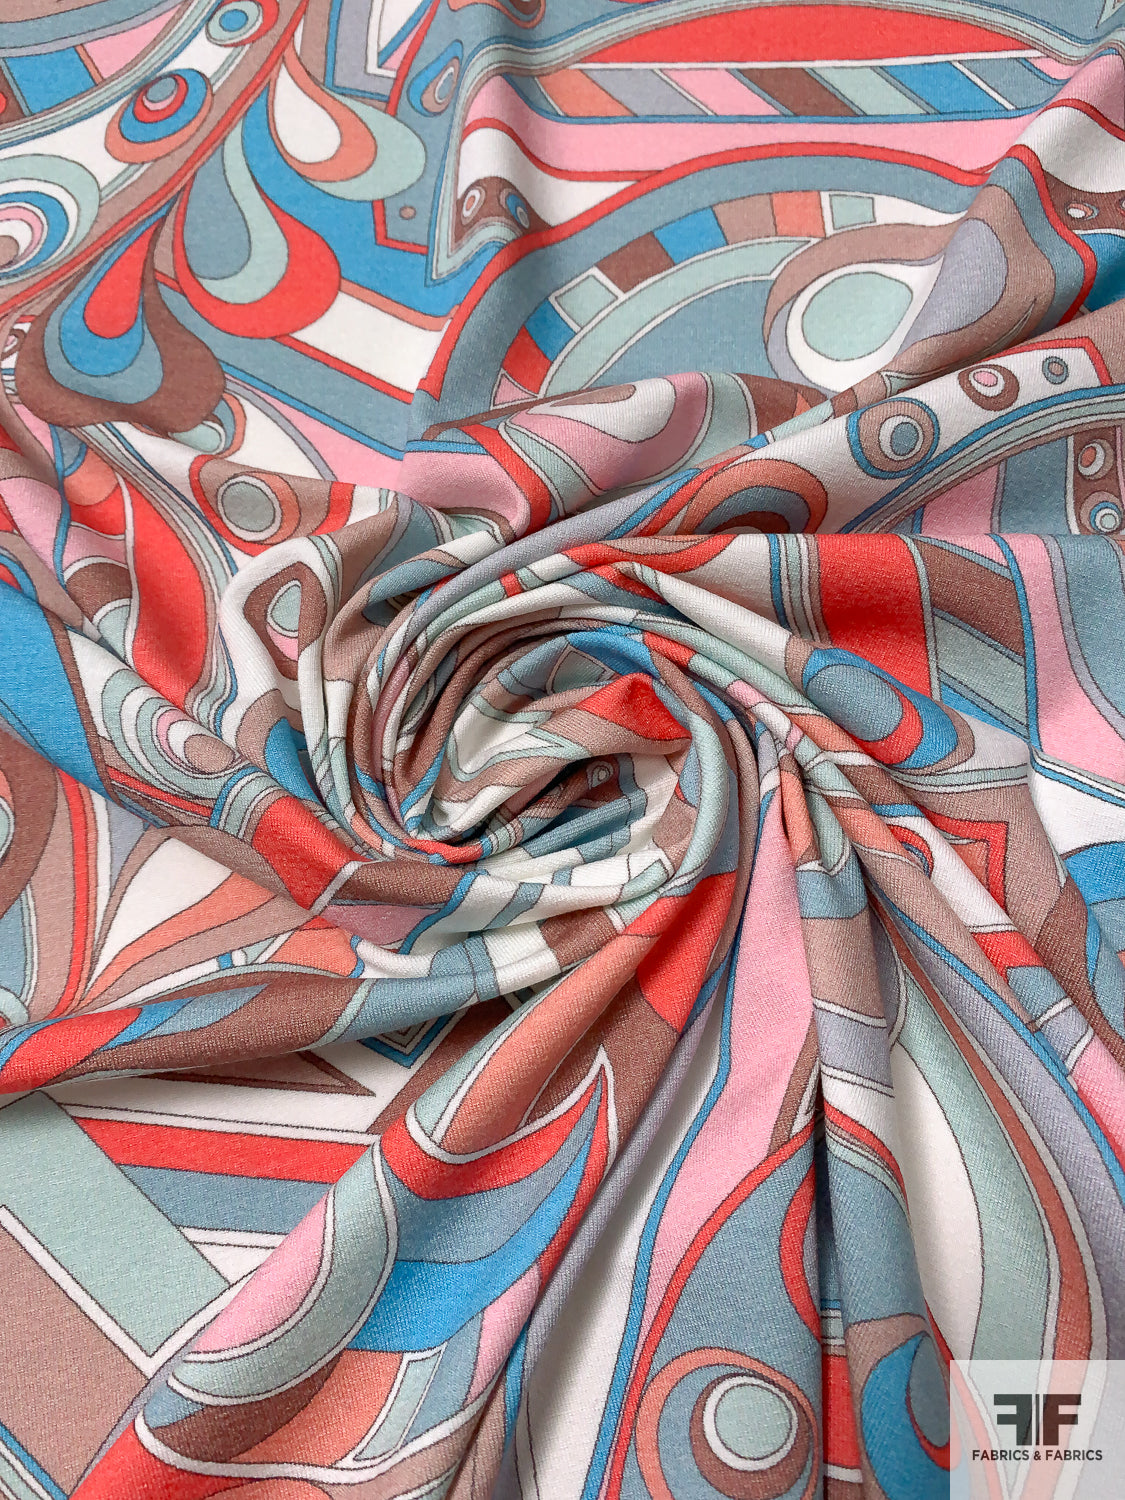 - Stretch FABRICS Jersey Knit FABRICS Pucci-esque – & Fabrics | Paisley & Coral/Blues/Browns/Pink Printed Deep Fabrics